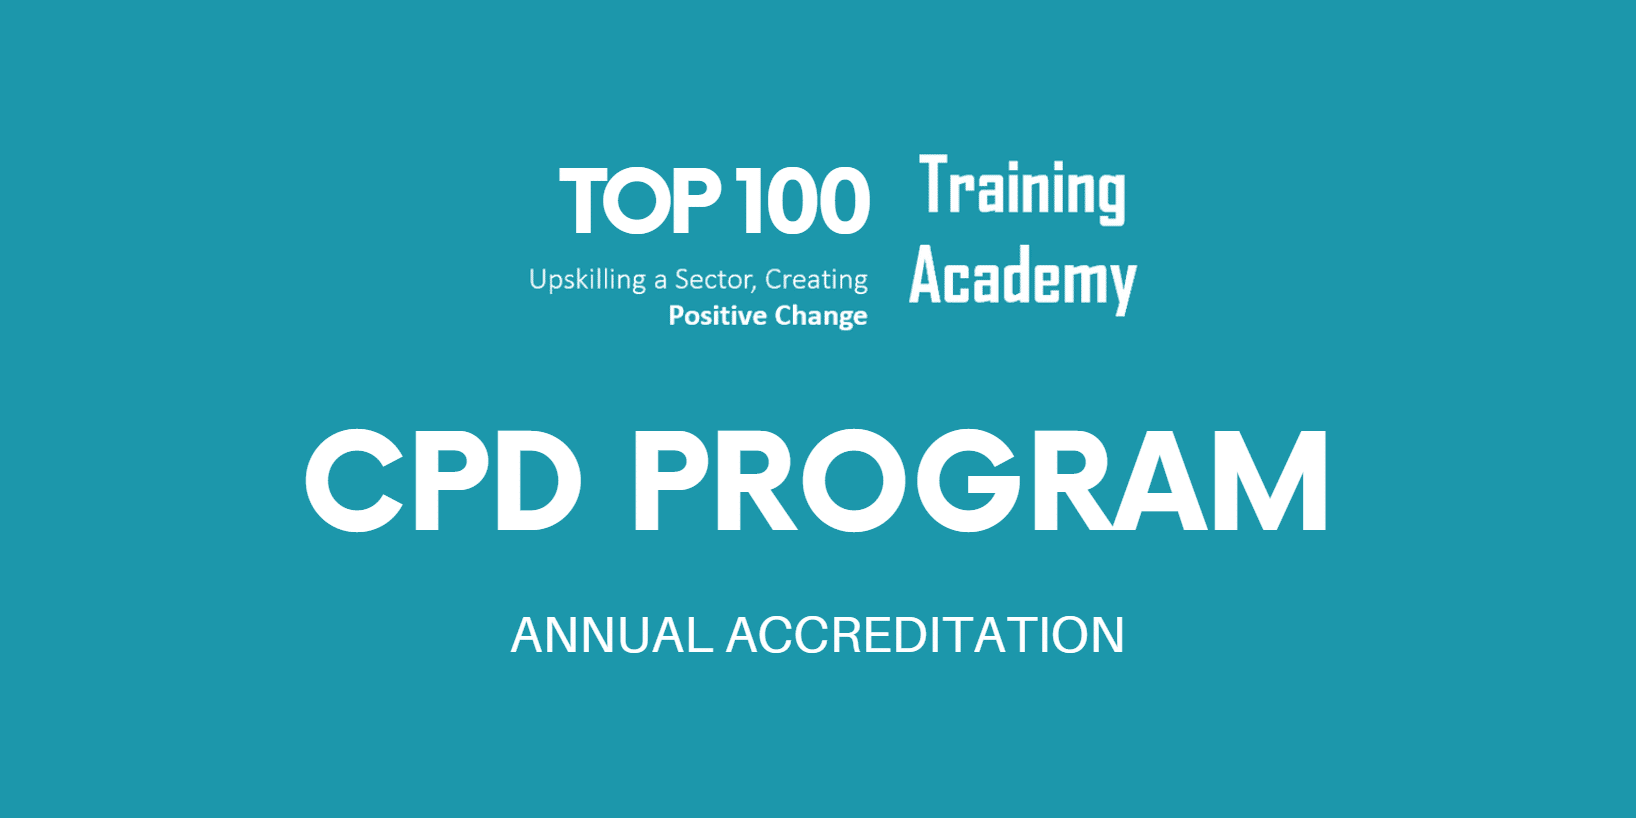 CPD Program - Annual Accreditation